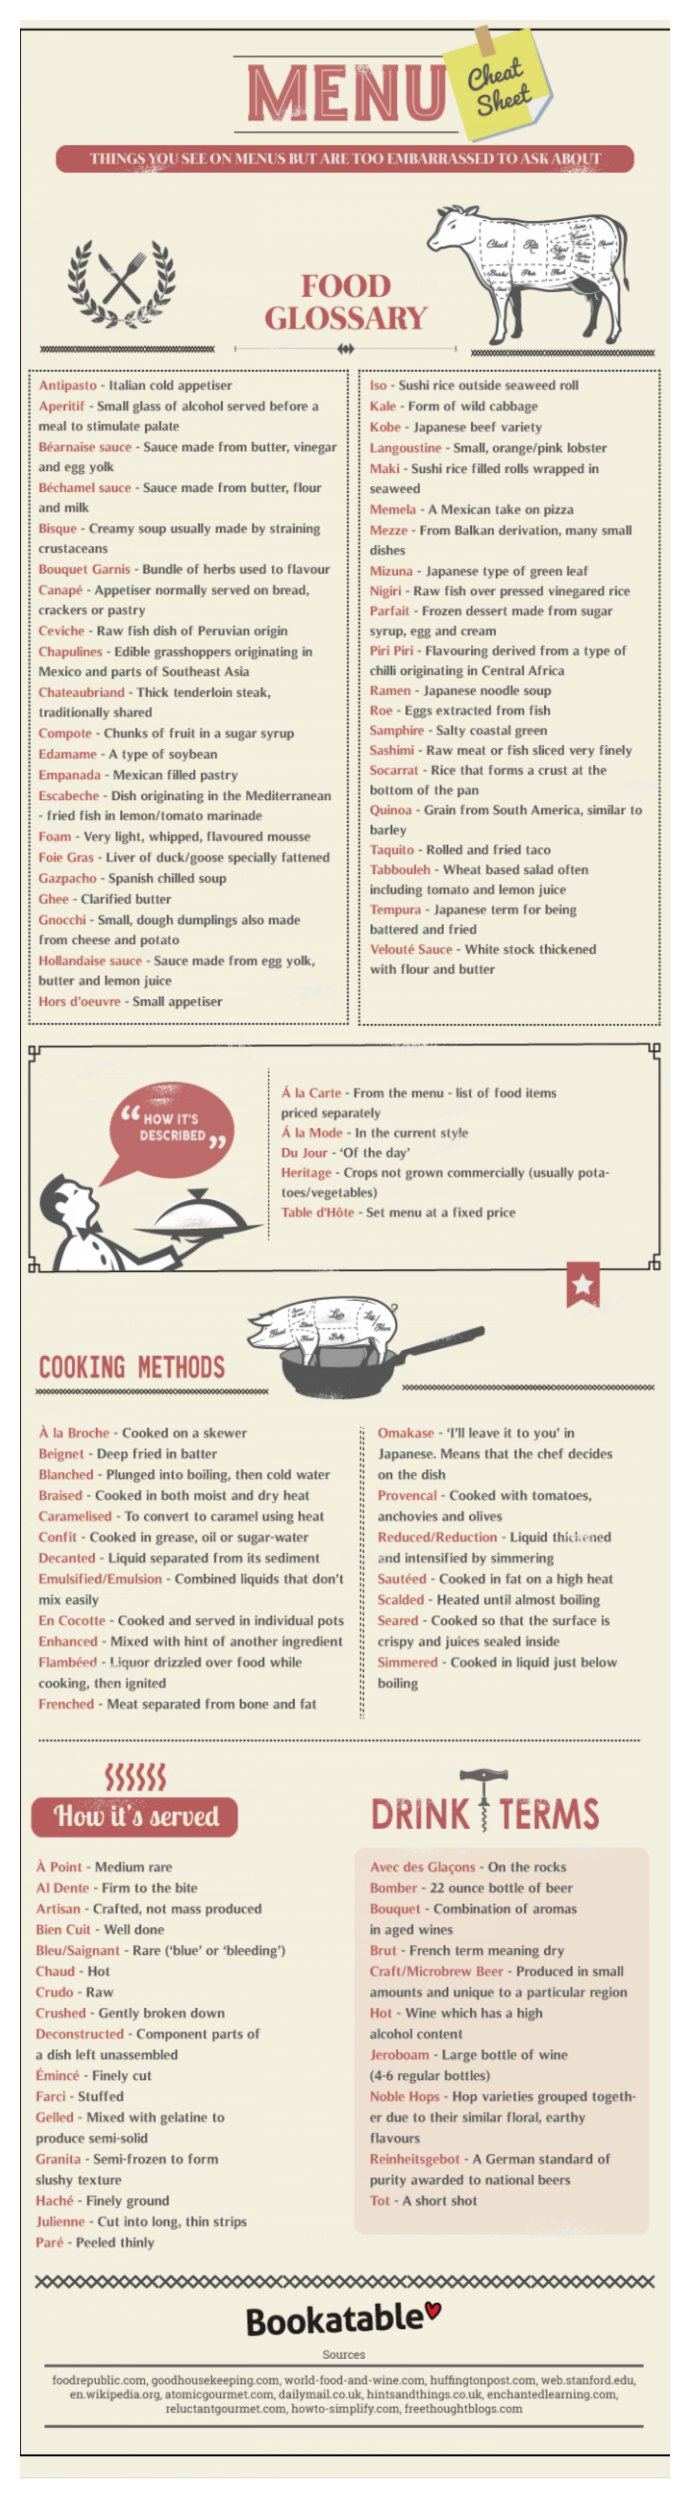 90 food menu terms explained